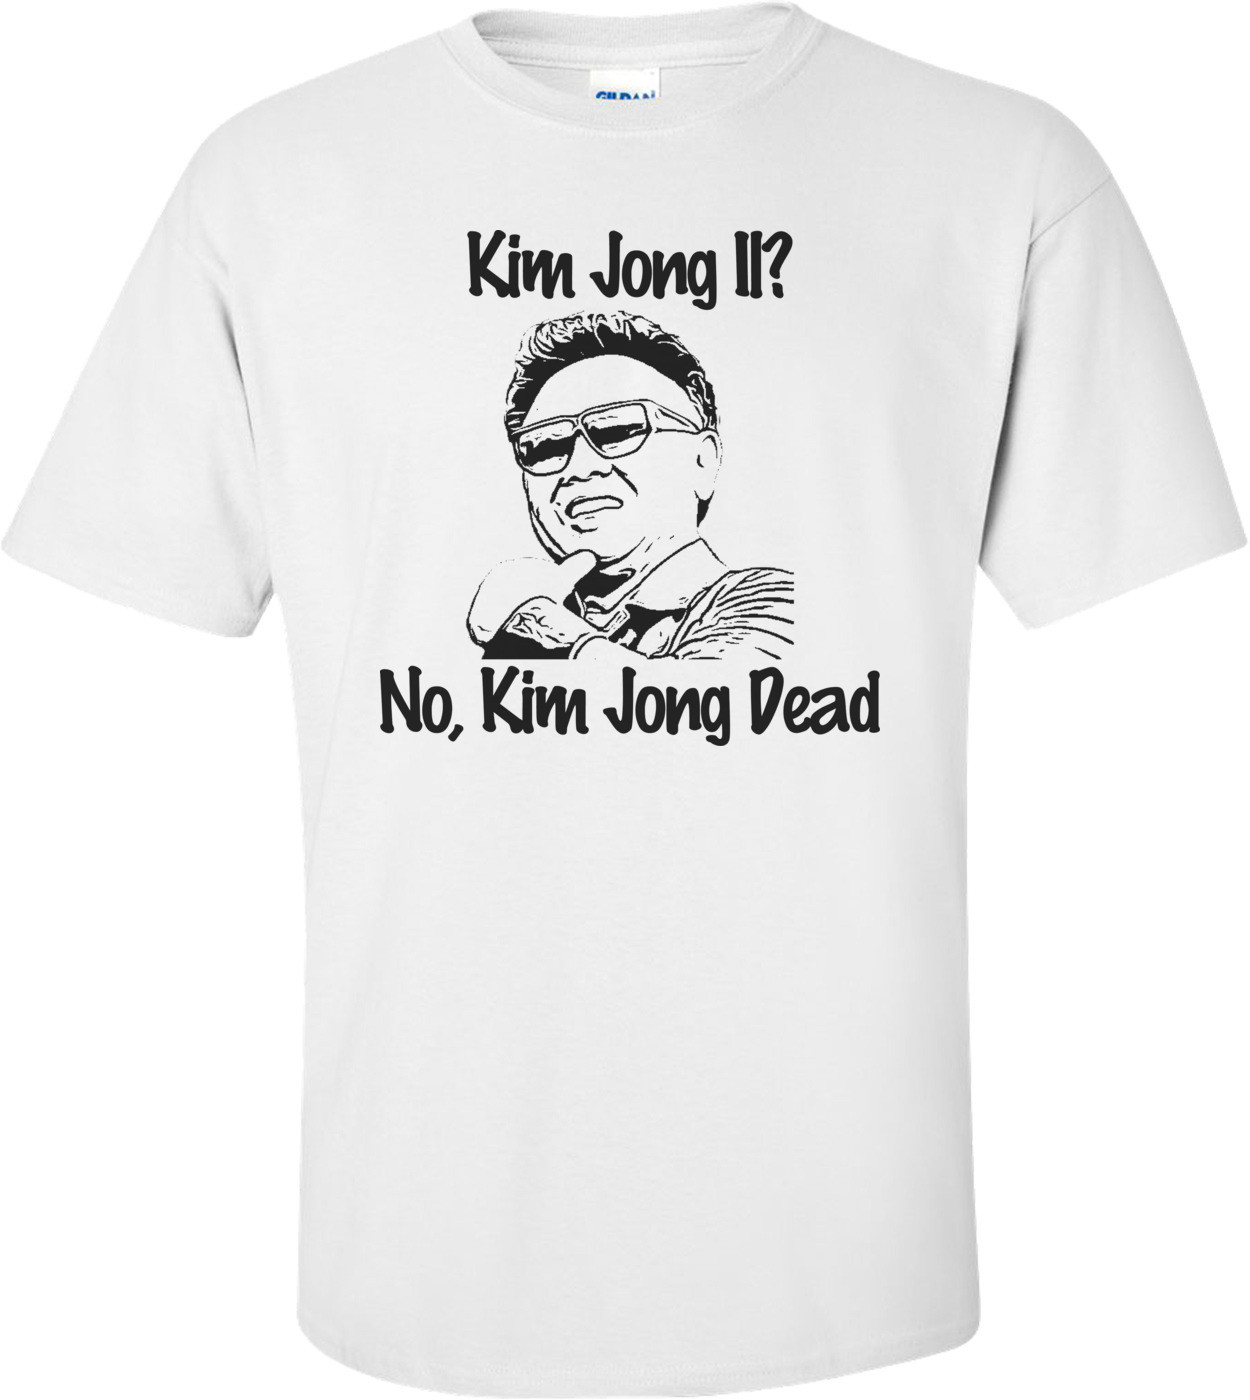 Kim Jong Il? No Kim Jong Dead - Kim Jong Il